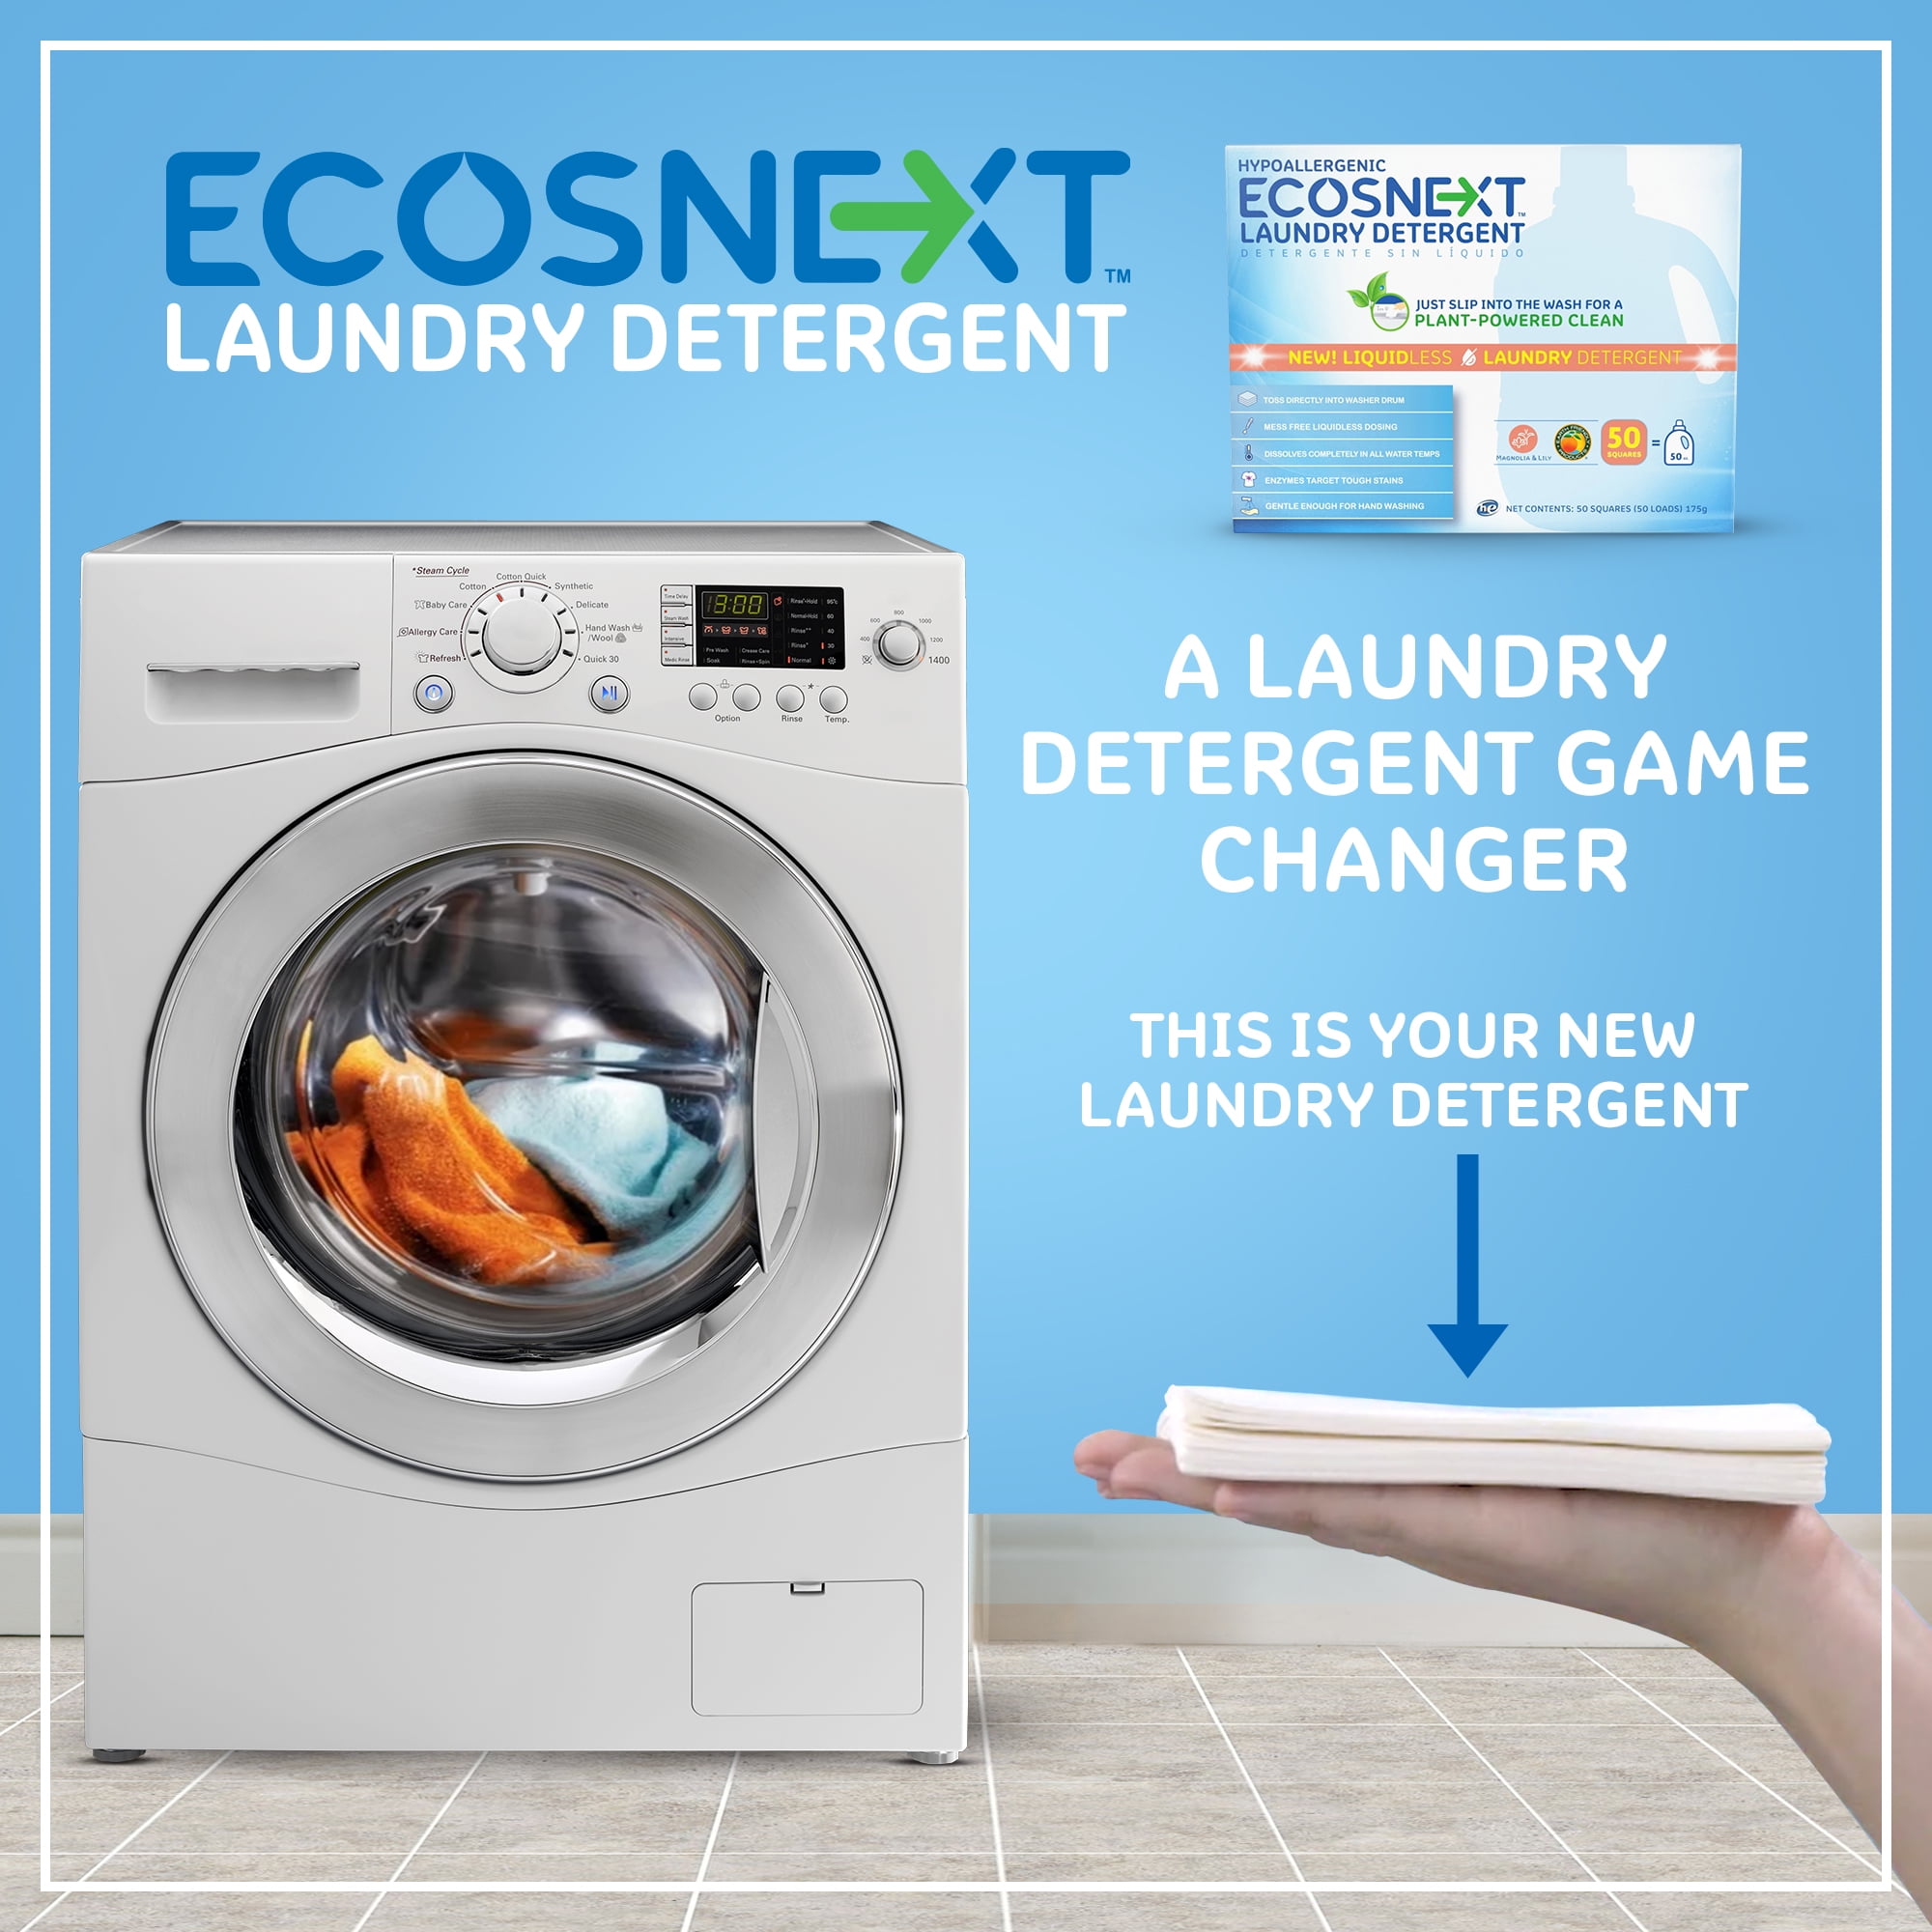 Ecosnext Liquidless Magnolia & Lily Laundry Detergent 50 Count